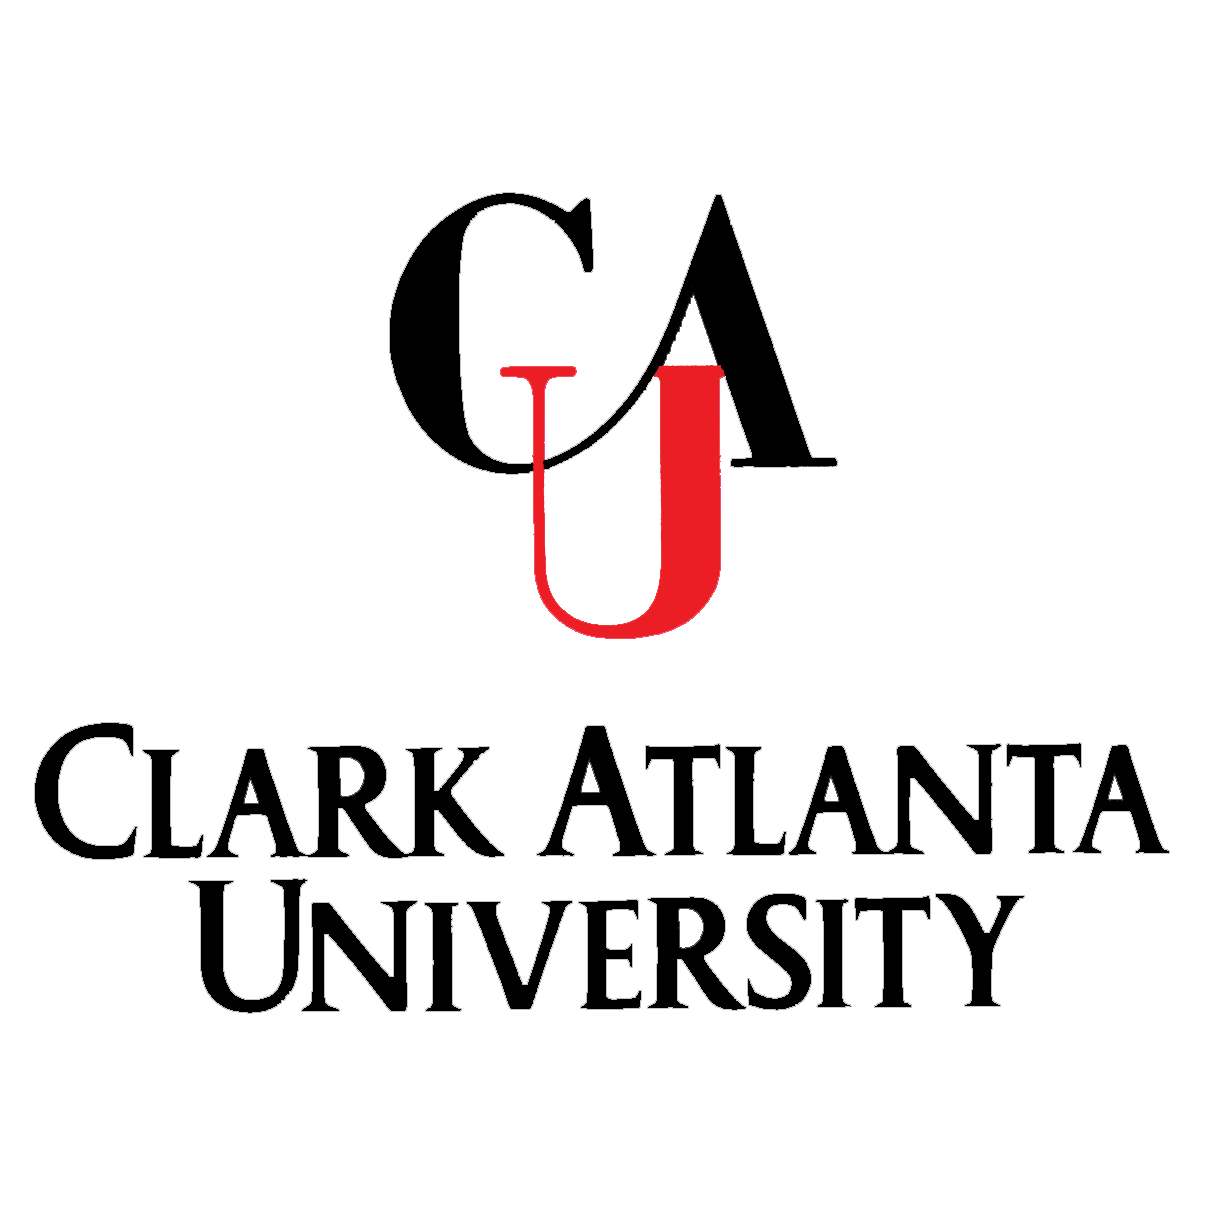 Clark Atlanta University logo